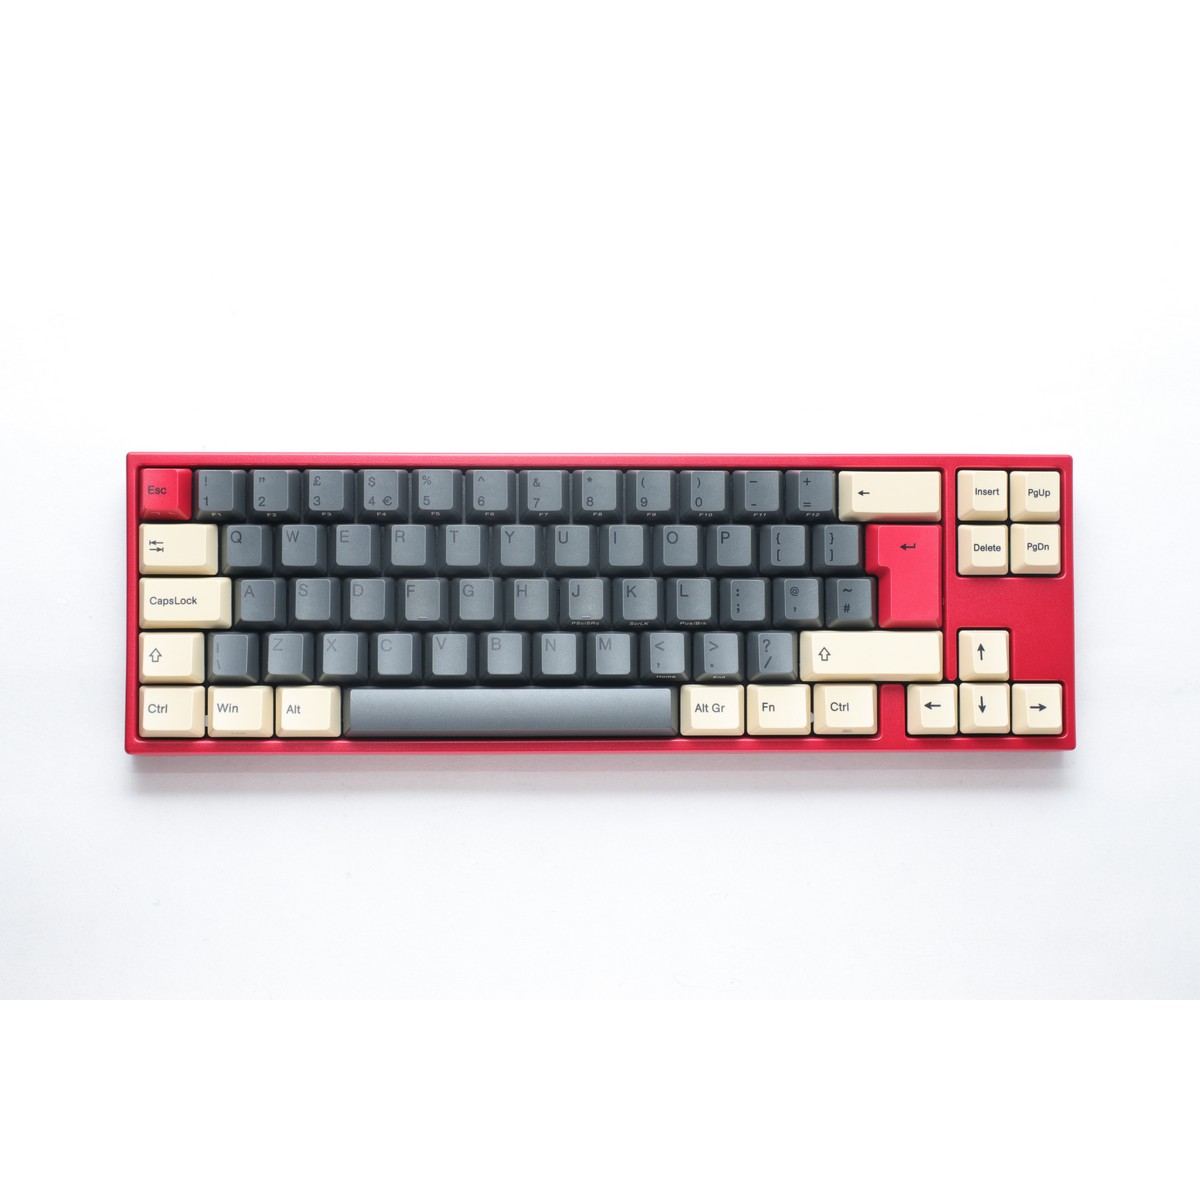 Ducky x Varmilo MIYA 69 Pro Knight Mechanical Gaming Keyboard Cherry MX Red White Backlit - Red/Grey/Cream